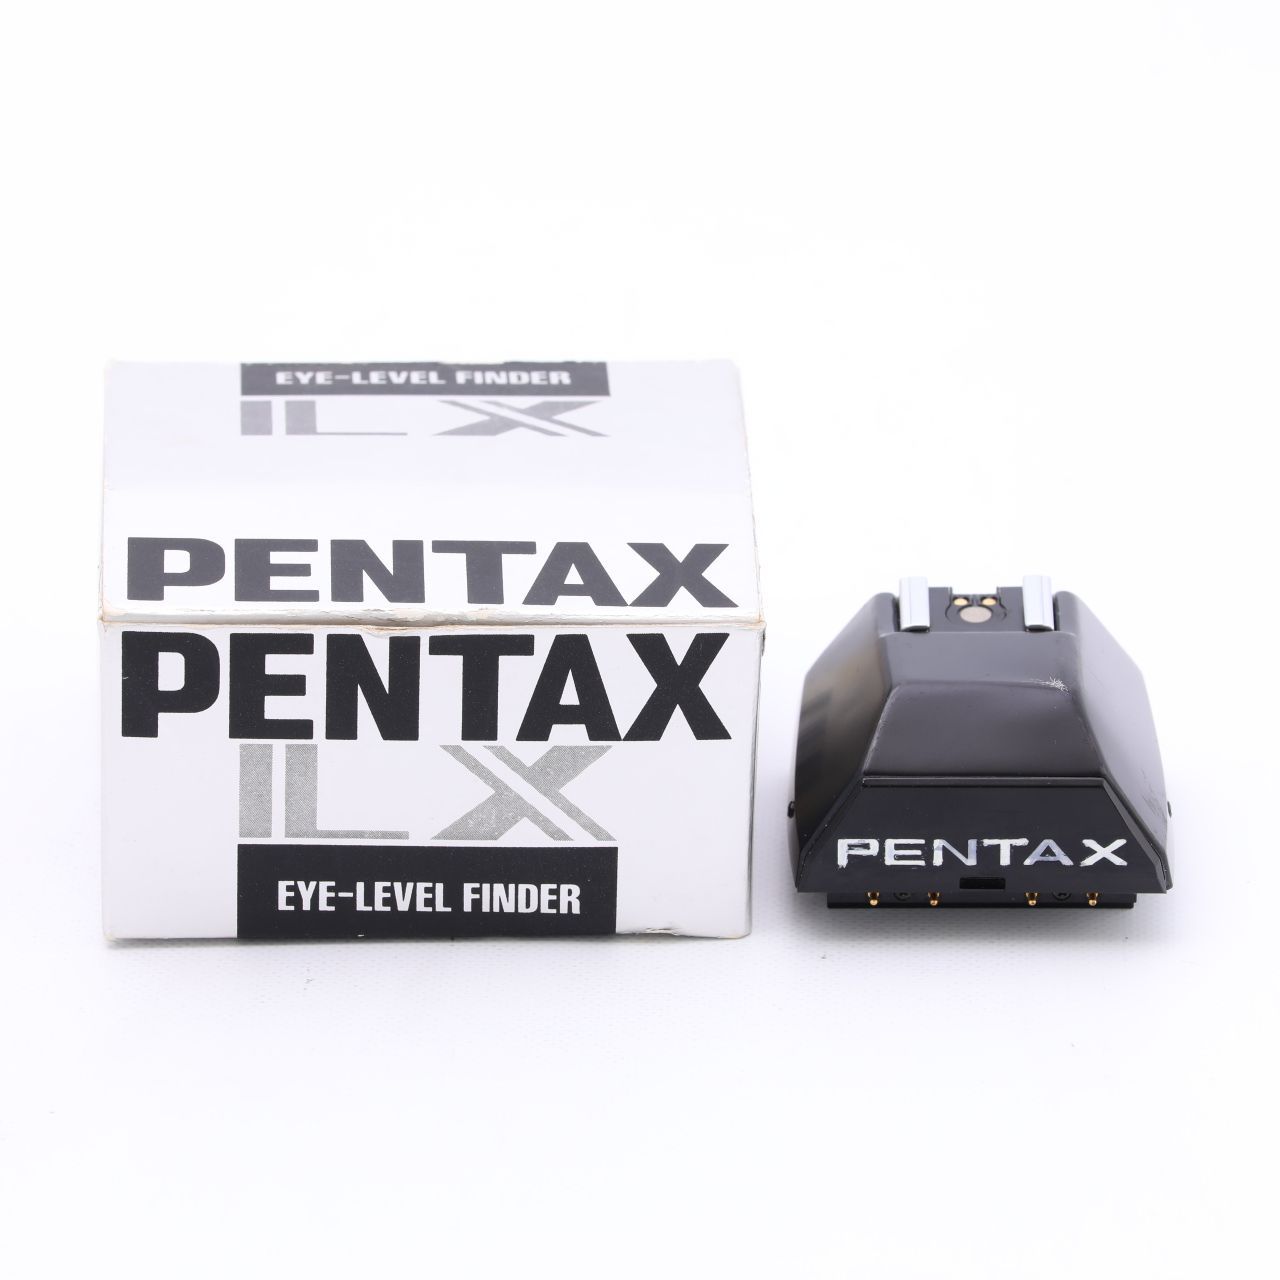 PENTAX ペンタックス LX用 アイレベルファインダー FA-1 LX EYE-LEVEL